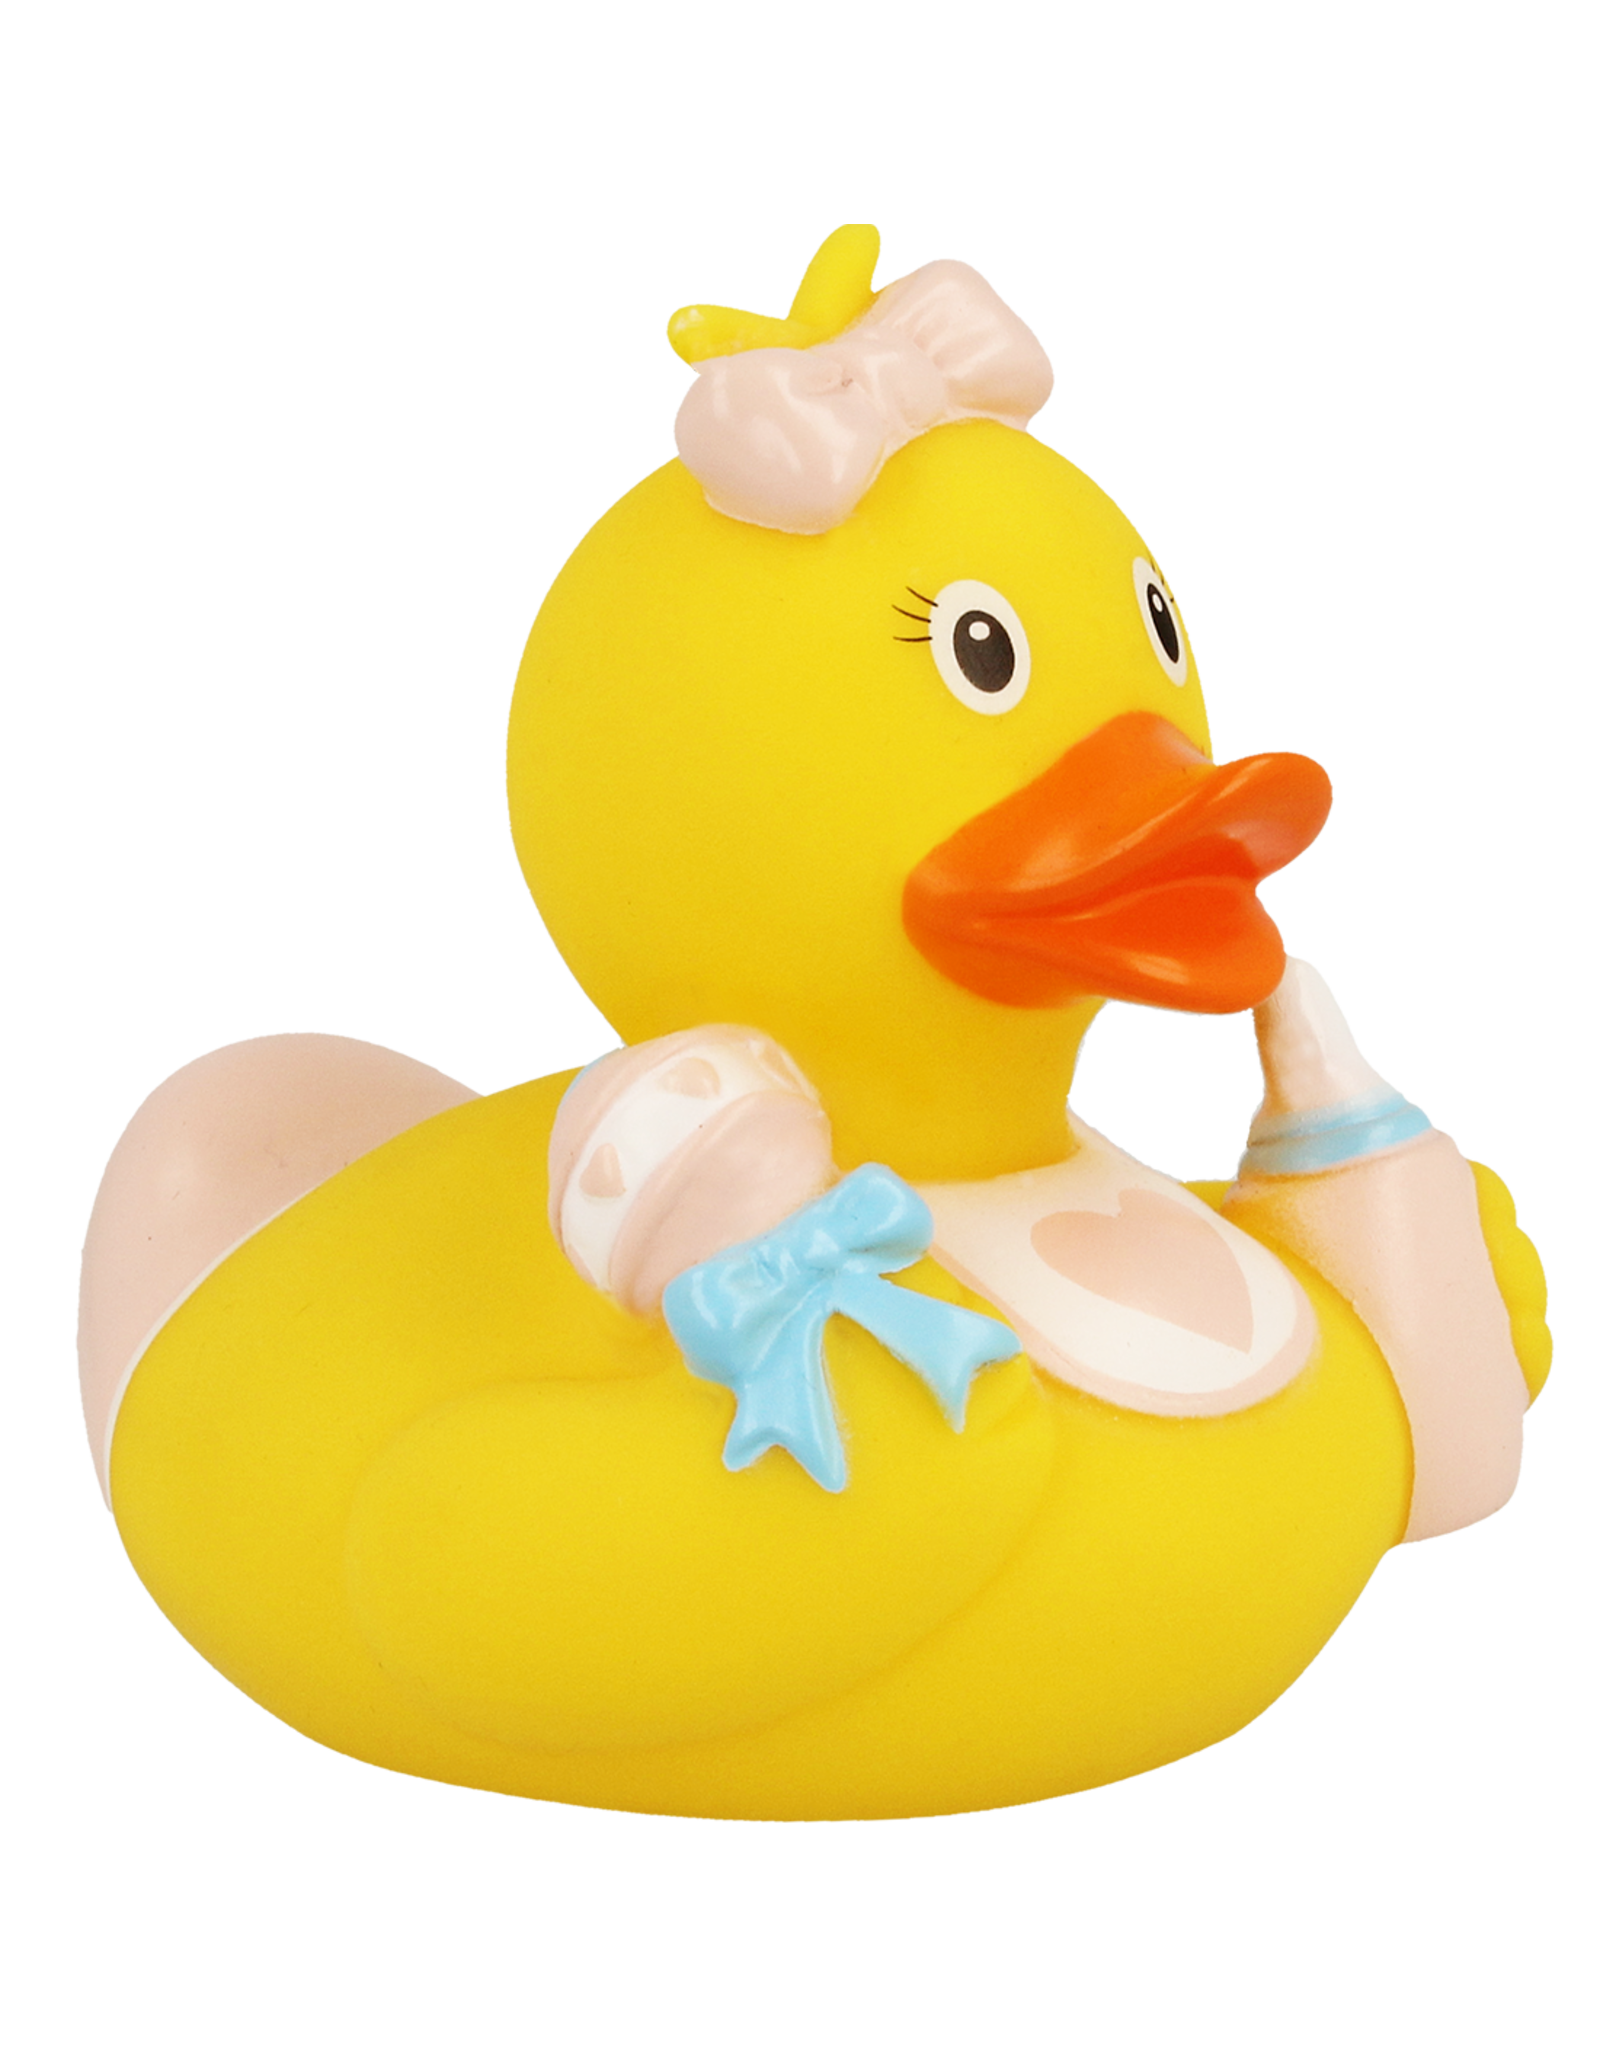 Lilalu Baby Girl Rubber Duck